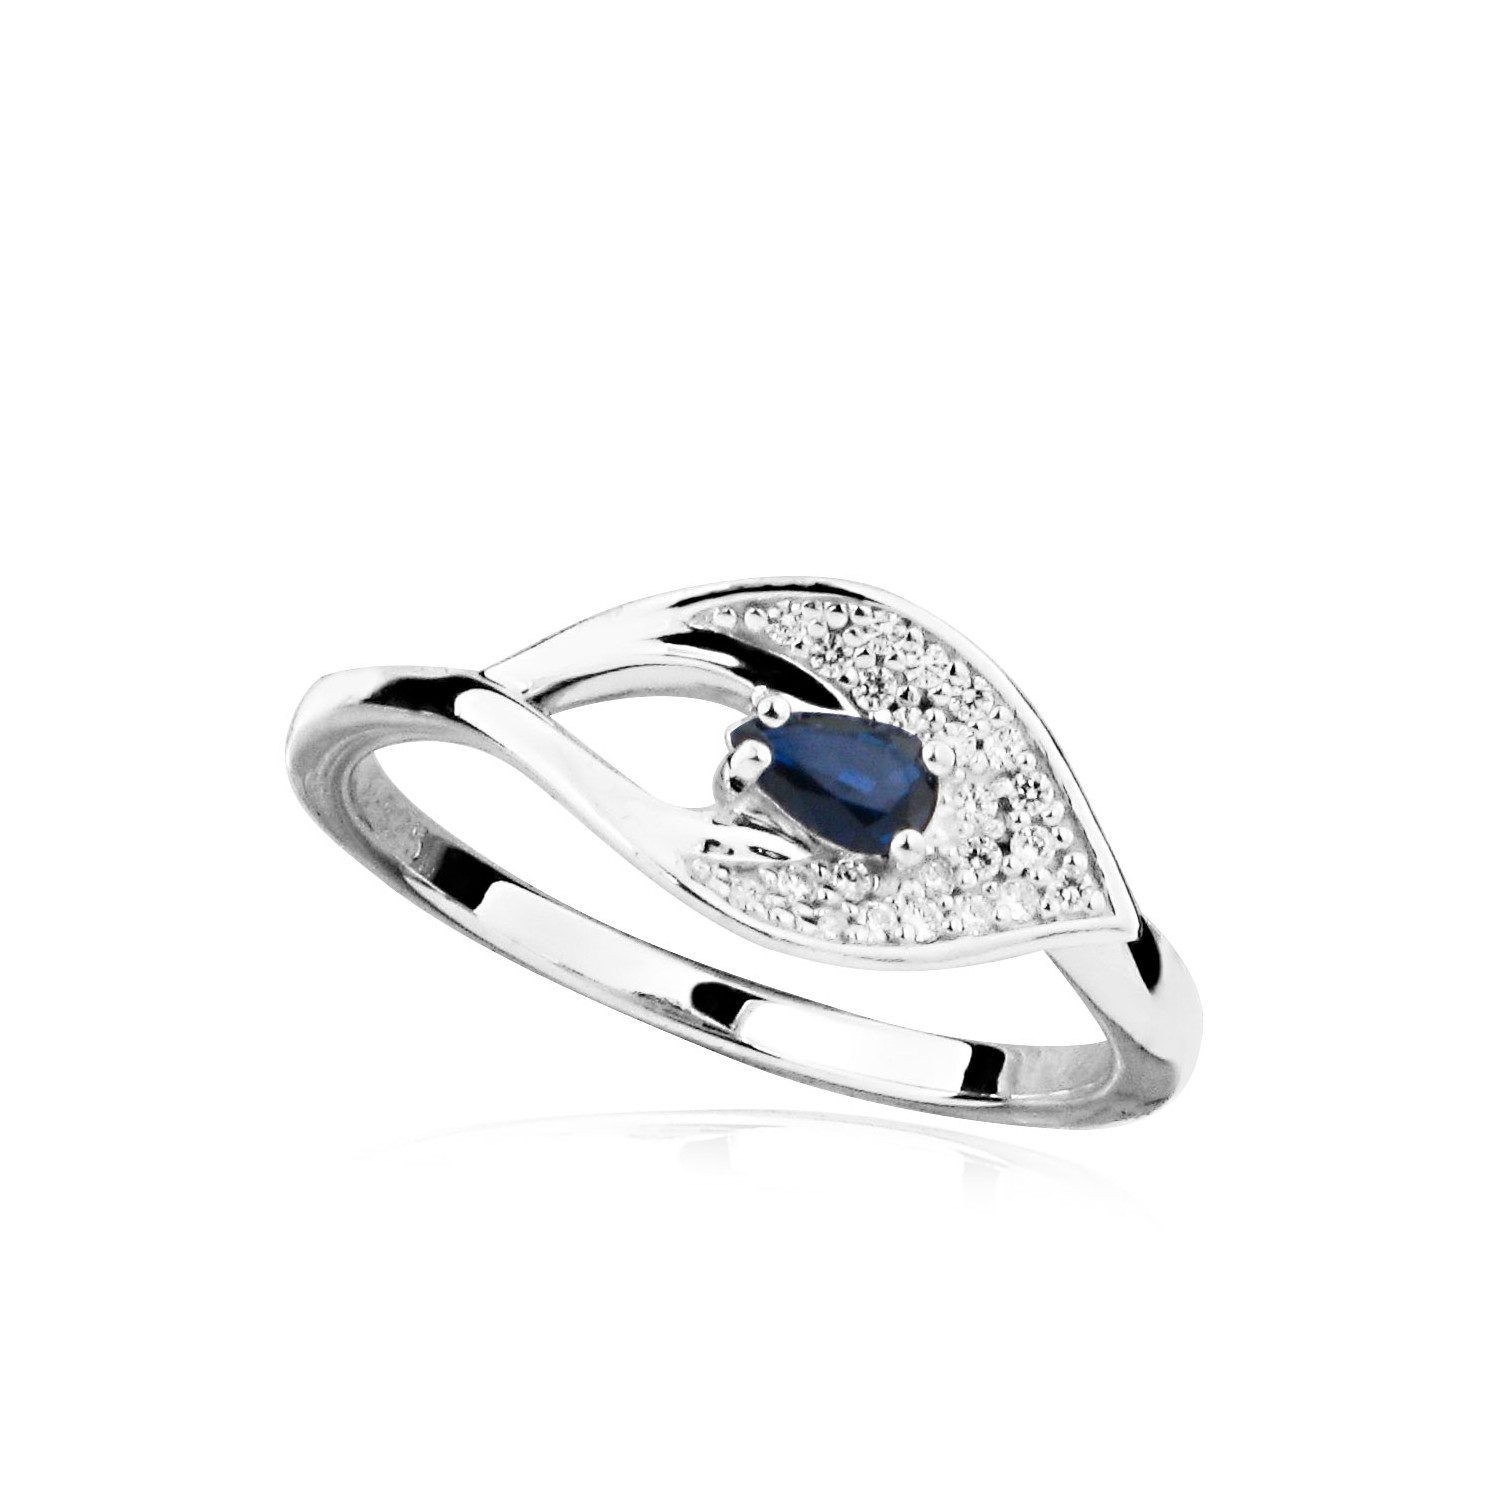 MOISS Moiss stříbrný prsten MARITA s MODRÝM SAFÍREM RG000057 Velikost 55 mm RG000057 + doprava ZDARMA